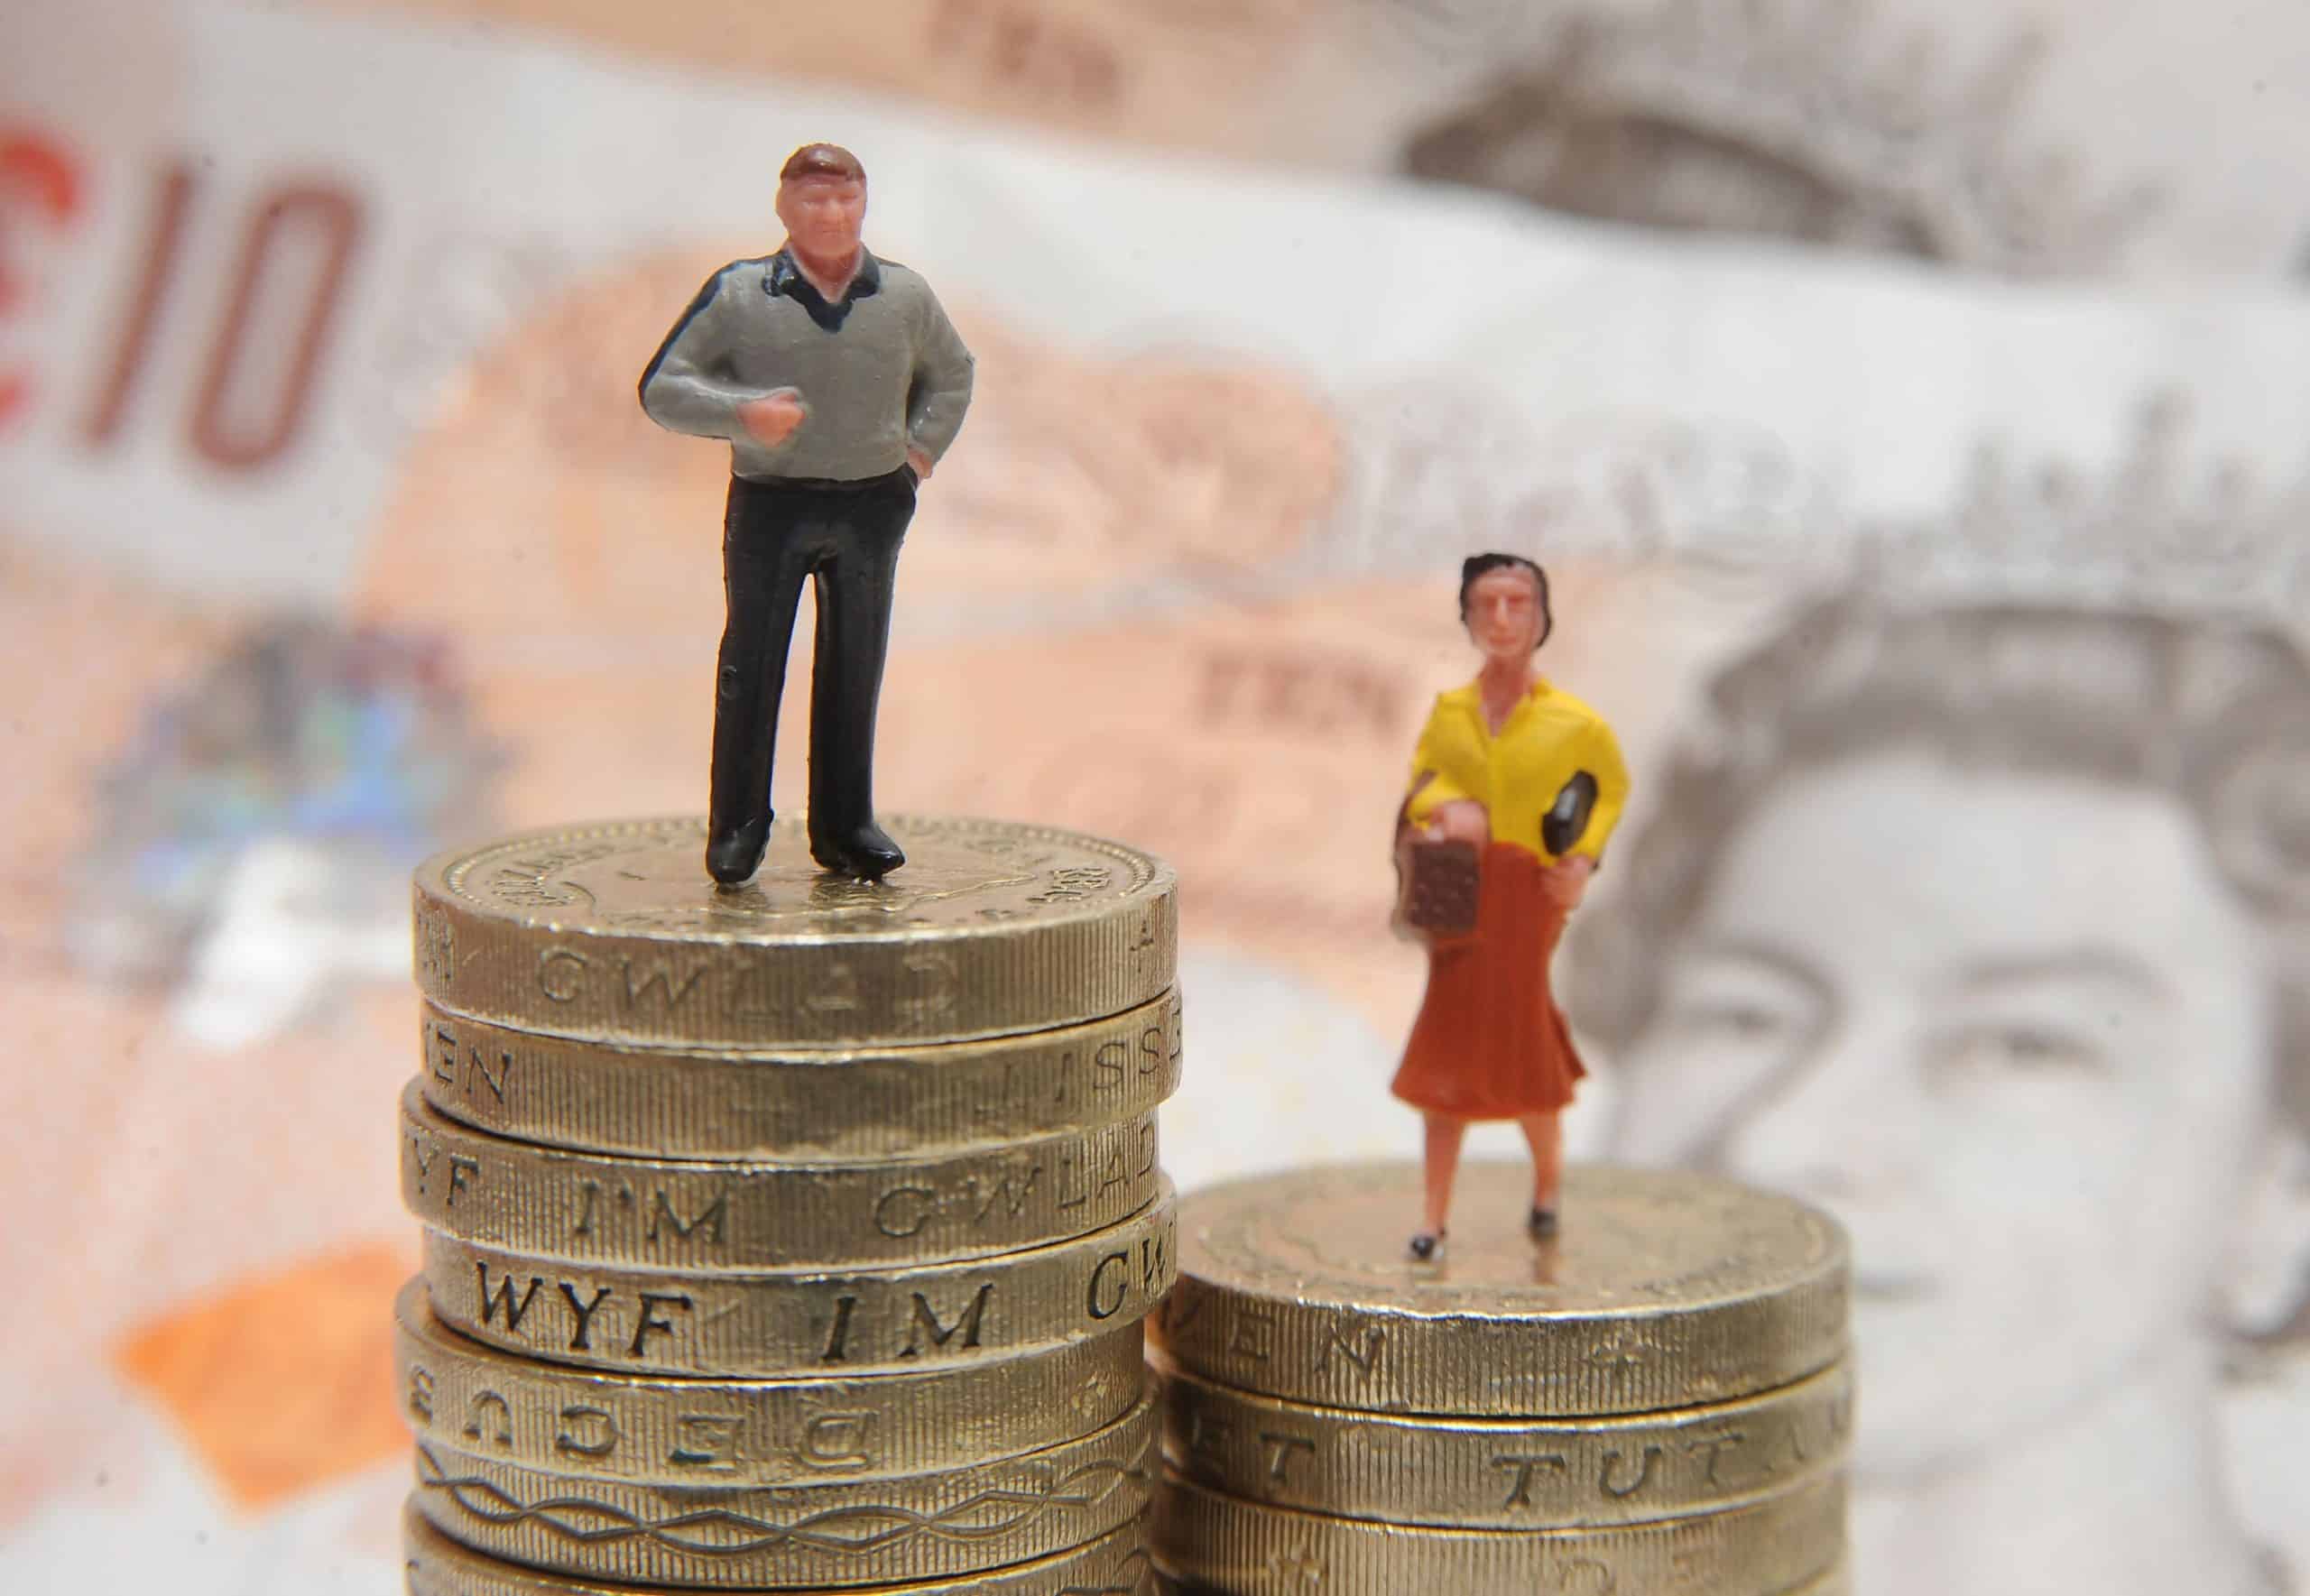 EasyJet among worst offenders as UK gender pay gap revealed